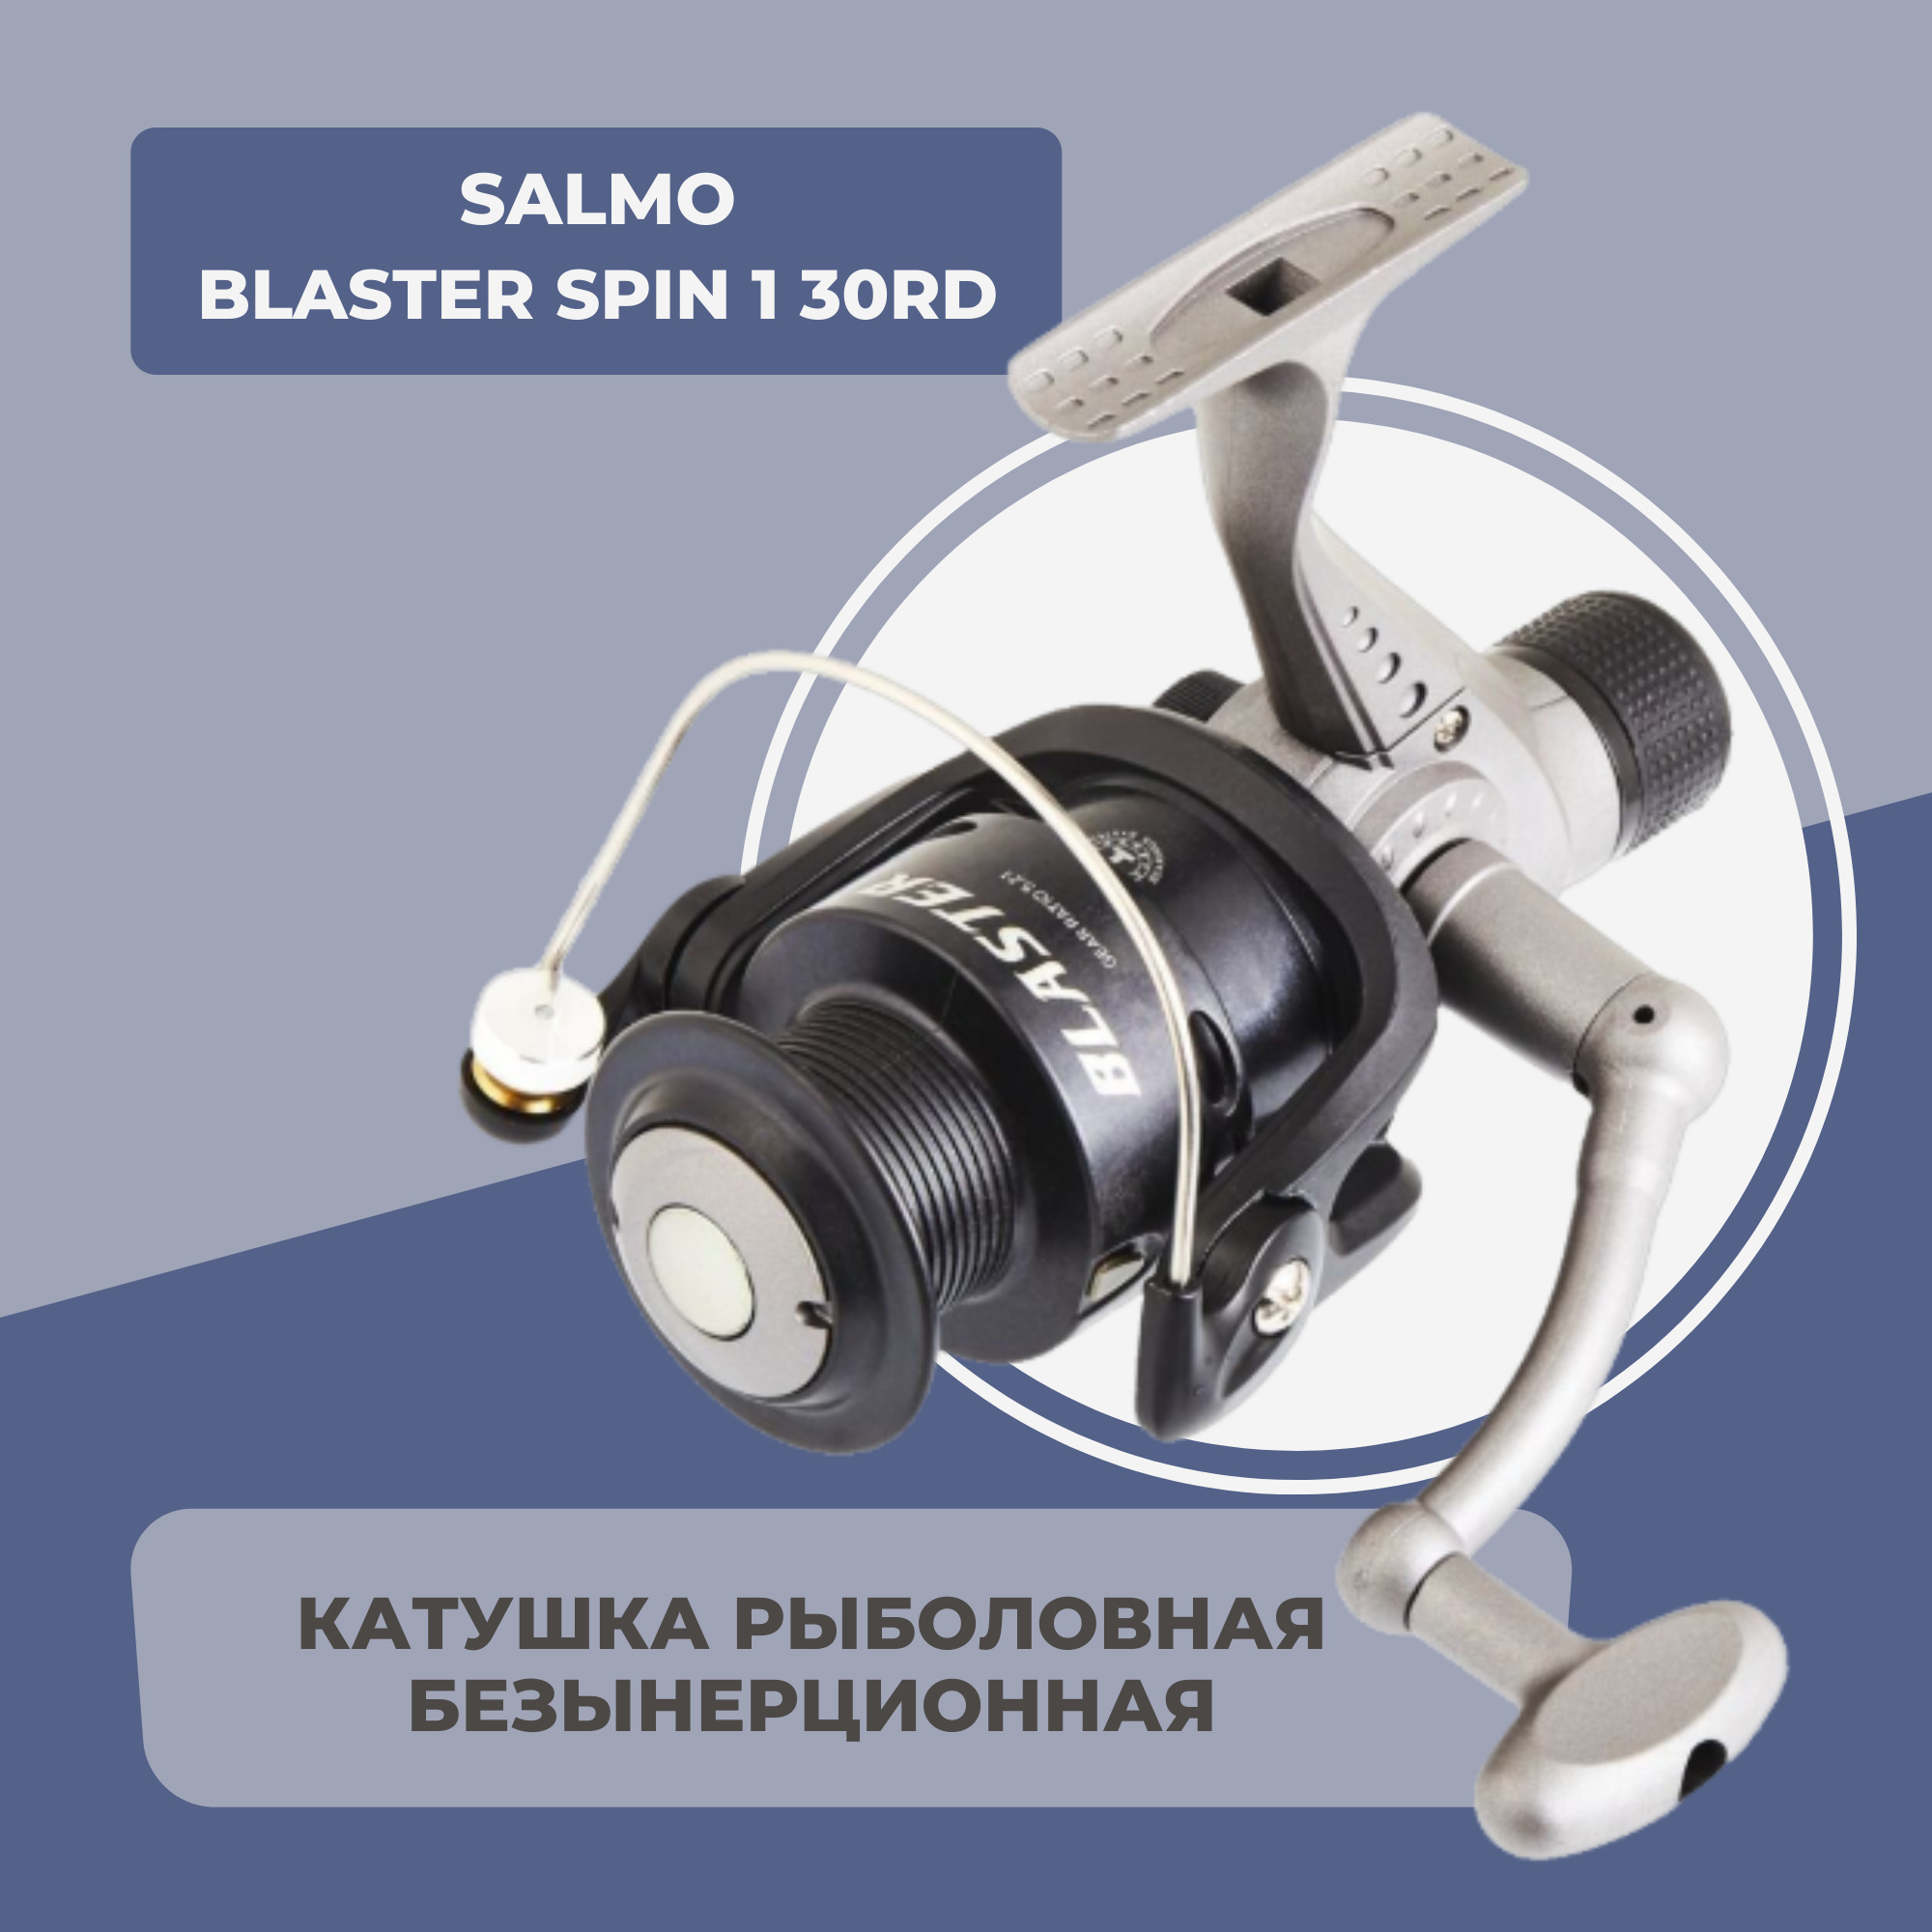 Spin blaster. Salmo Blaster Feeder катушка. Salmo Blaster Spin 40. Катушка для спиннинга Salmo. Spin 30 Blaster спиннинг.